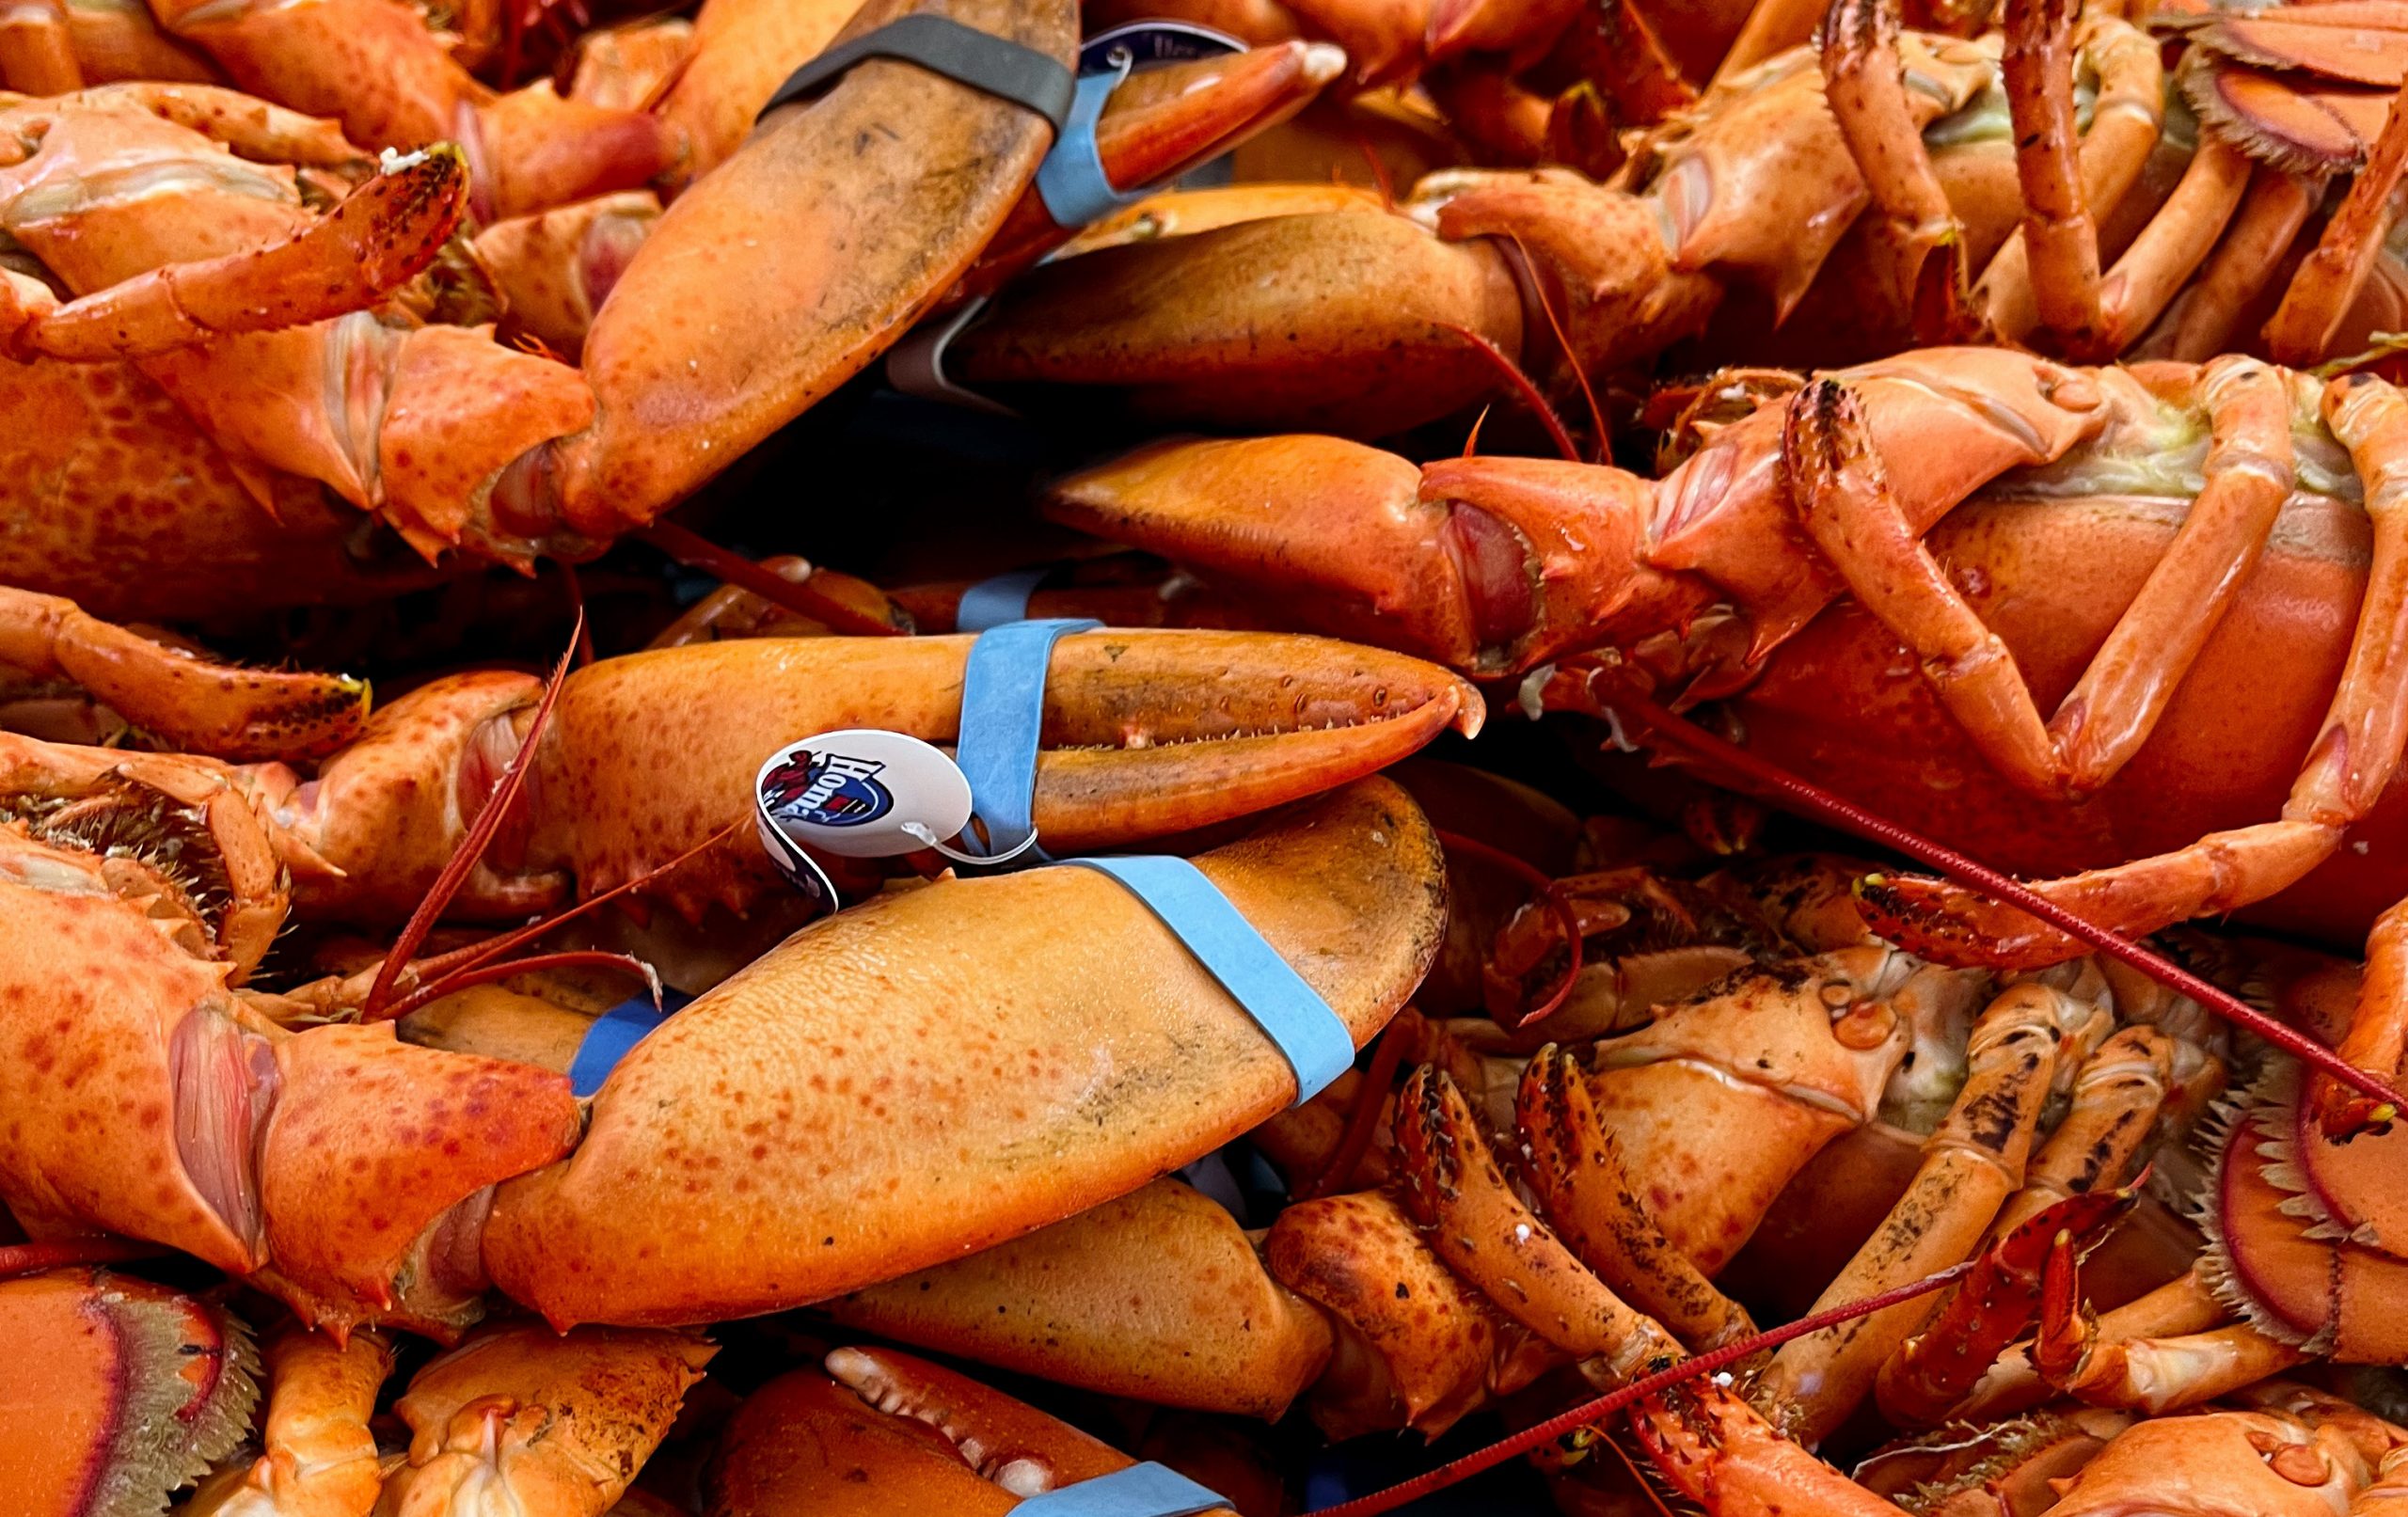 Québec Lobster, Poissons et fruits de mer